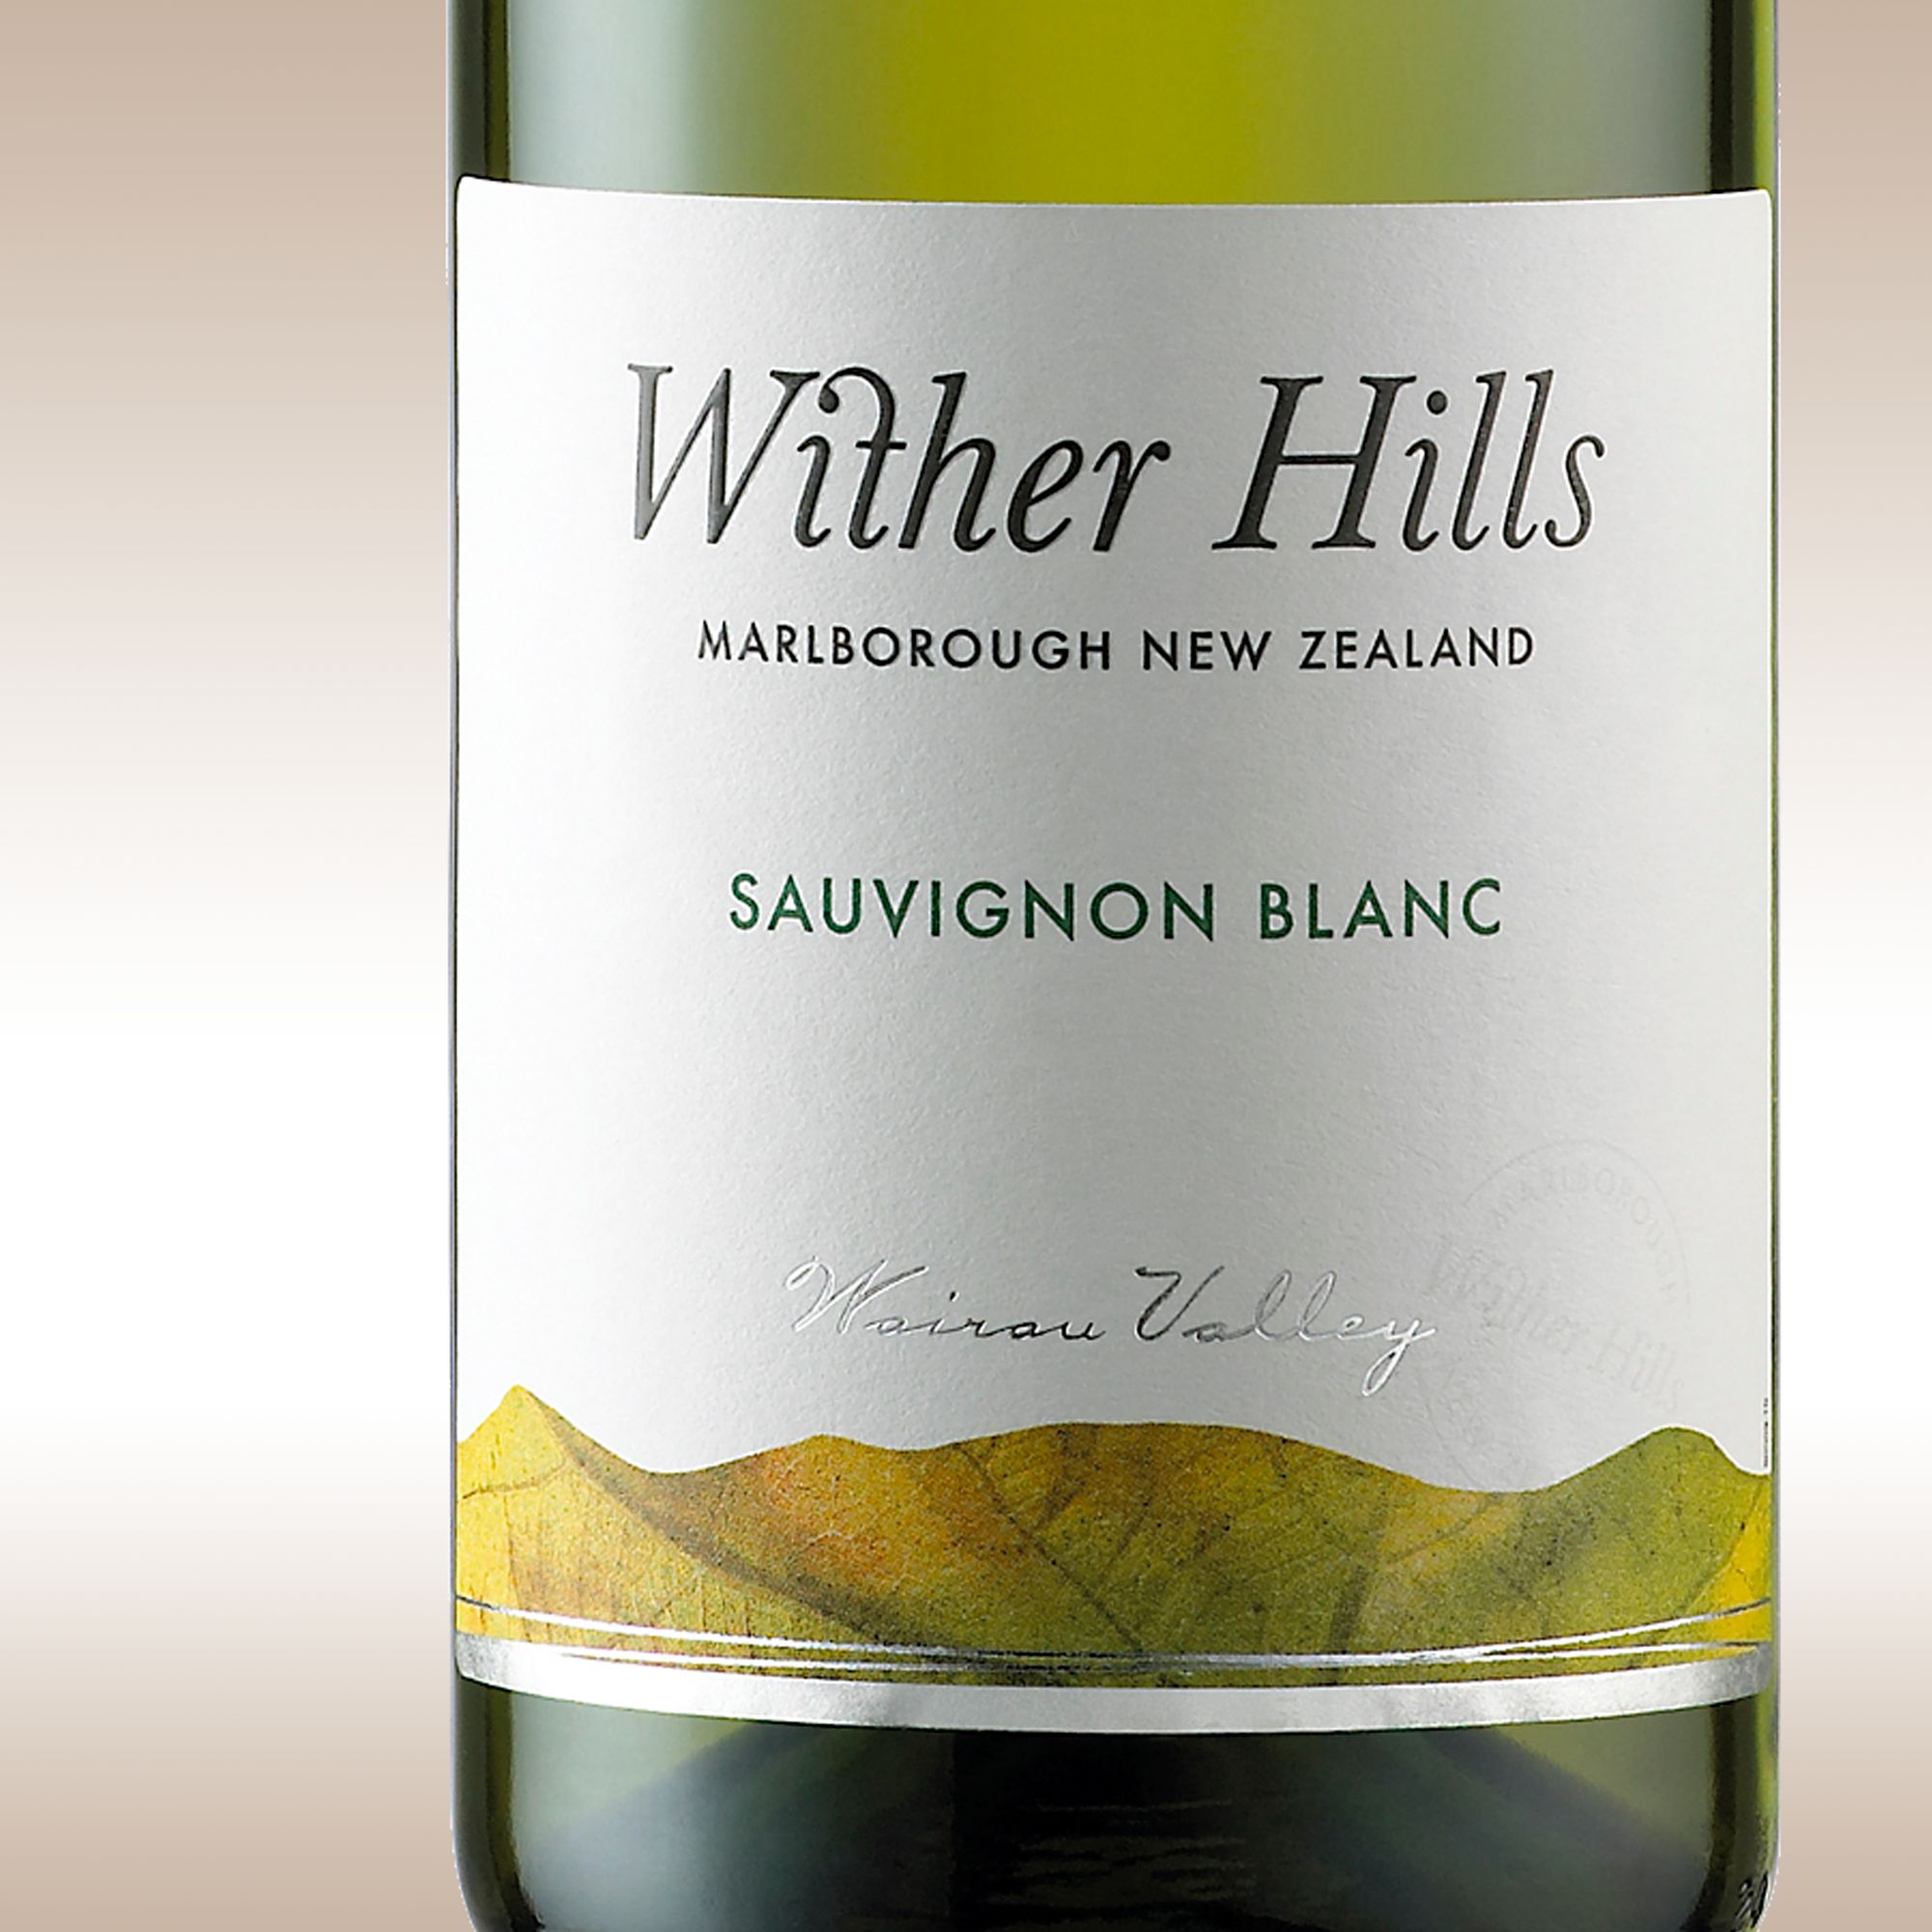 Unbranded Wither Hills Sauvignon Blanc 2008 Marlborough, New Zealand